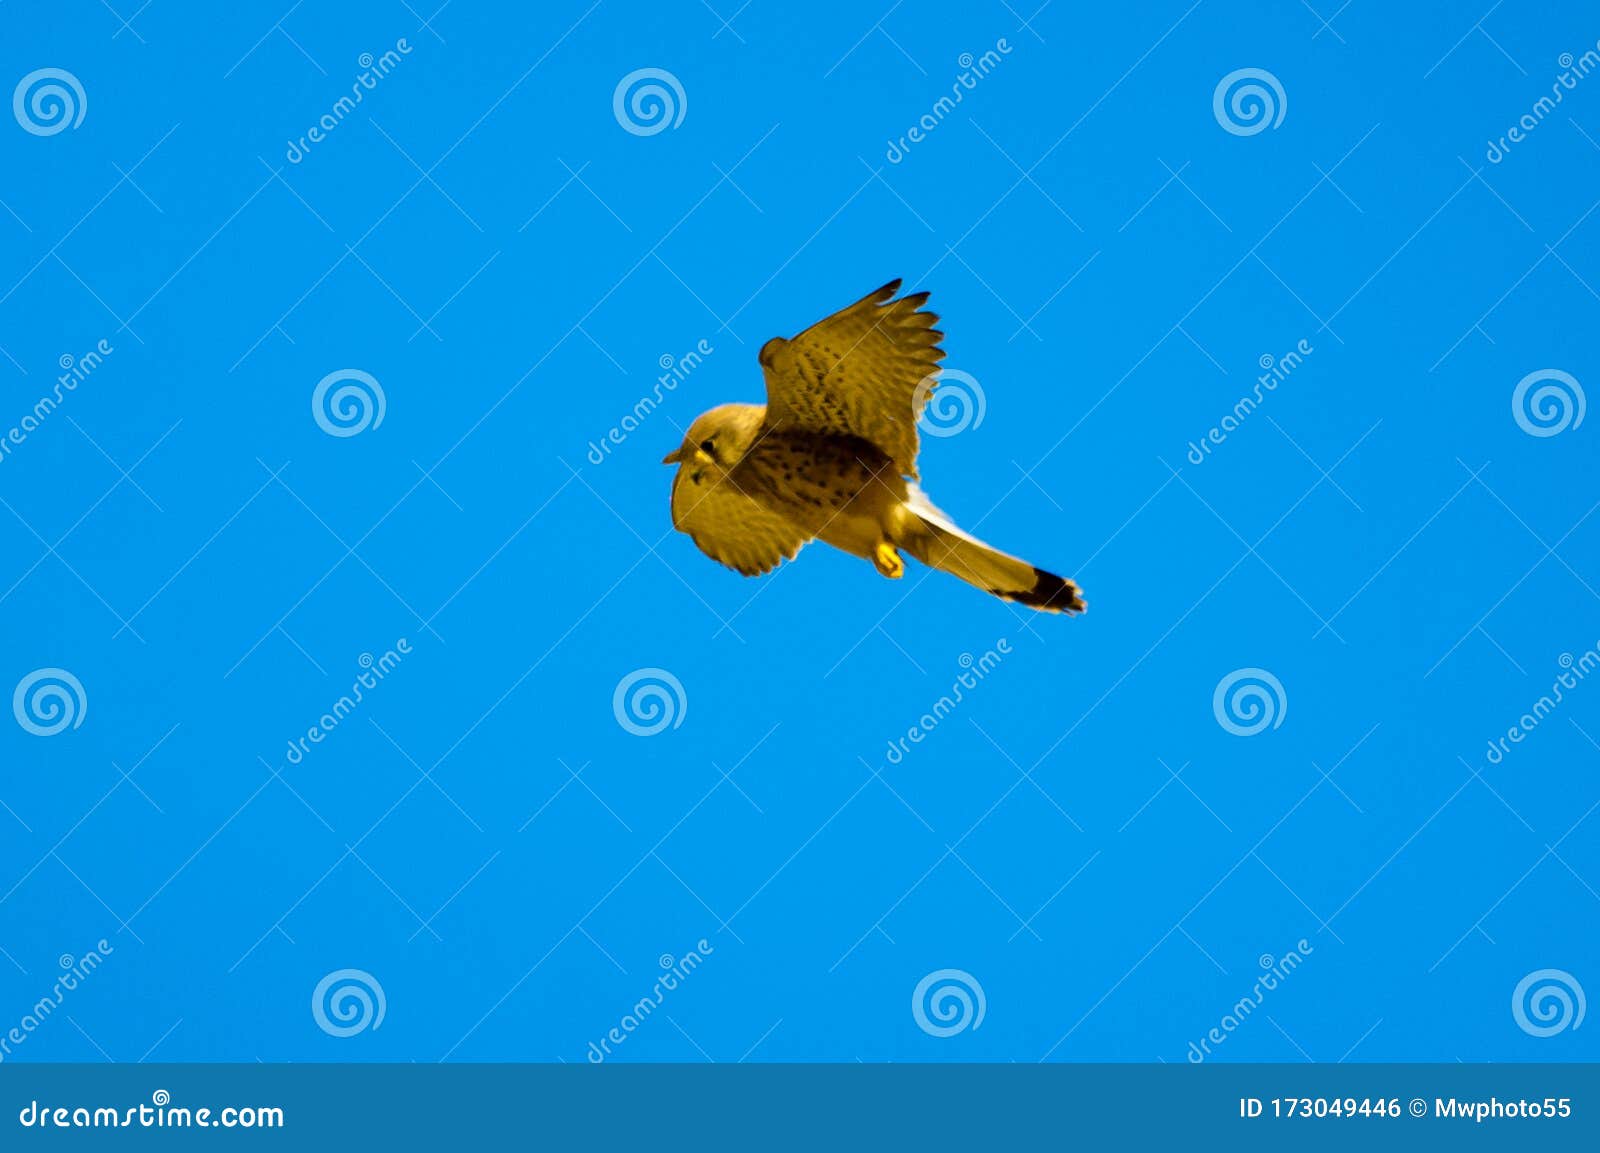 falcon  hunting